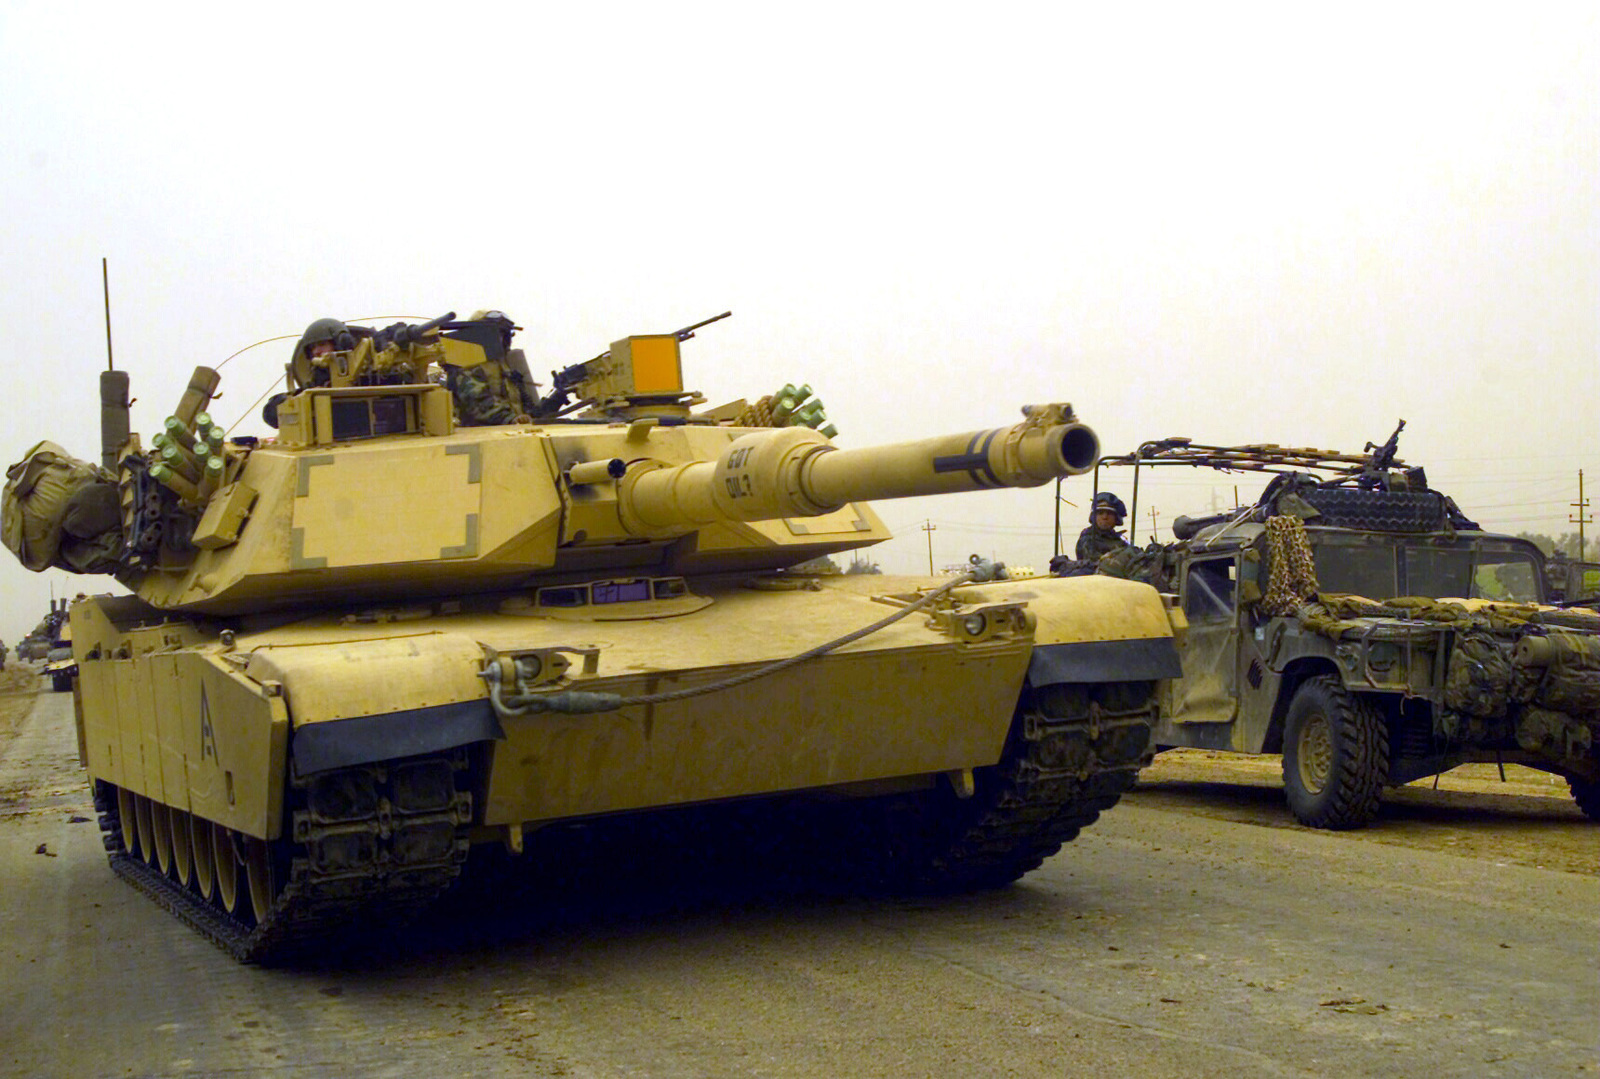 size of an usmc military tank